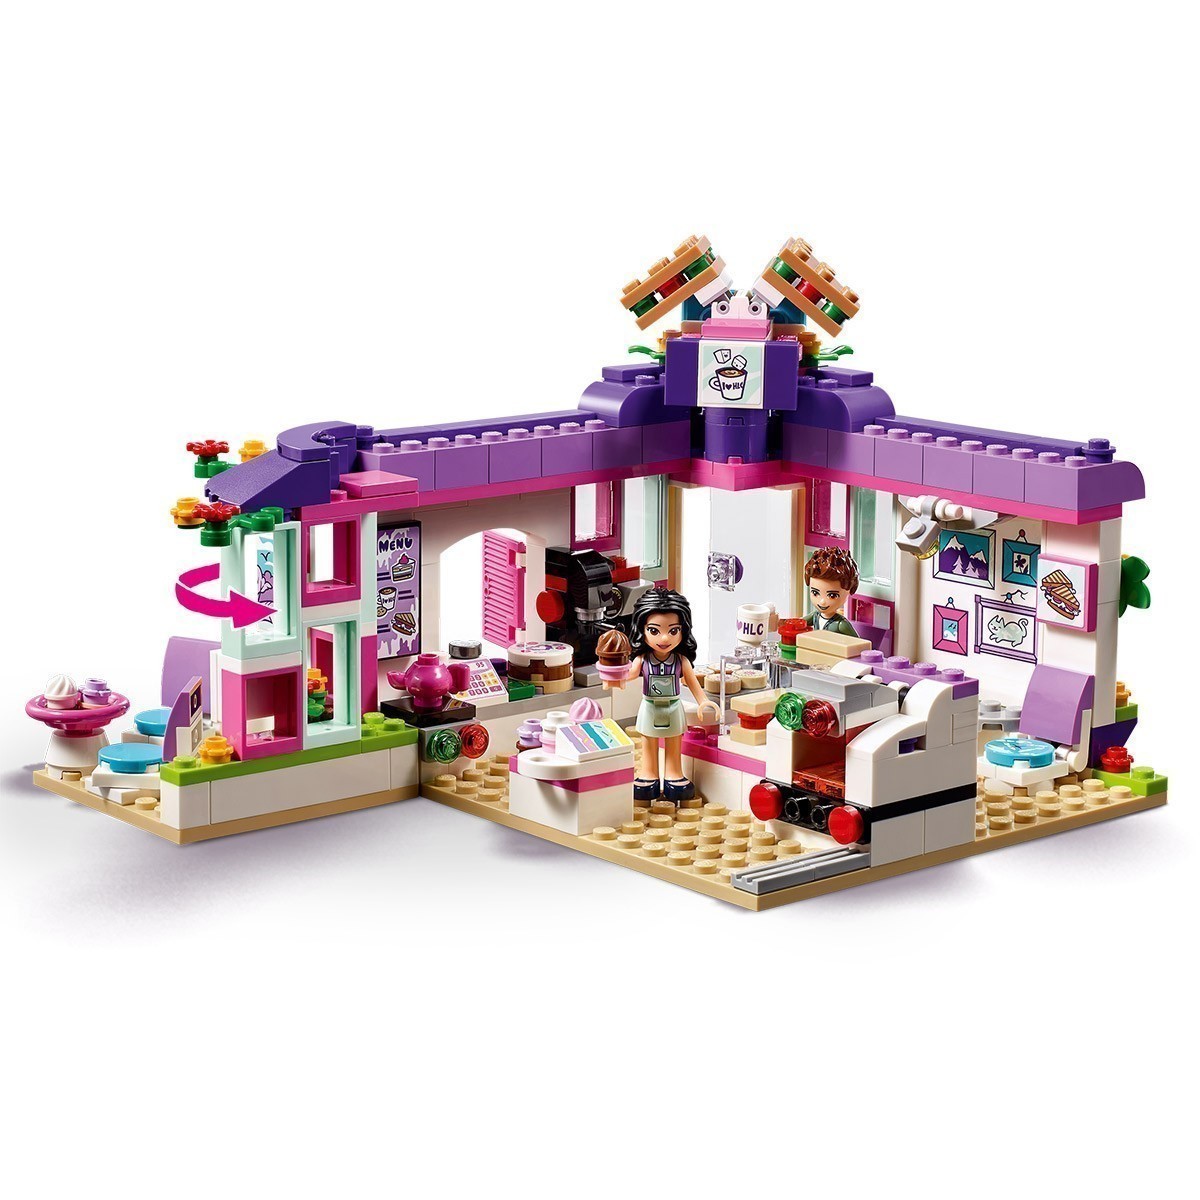 LEGO Friends 41336 - Emma's Art Cafe